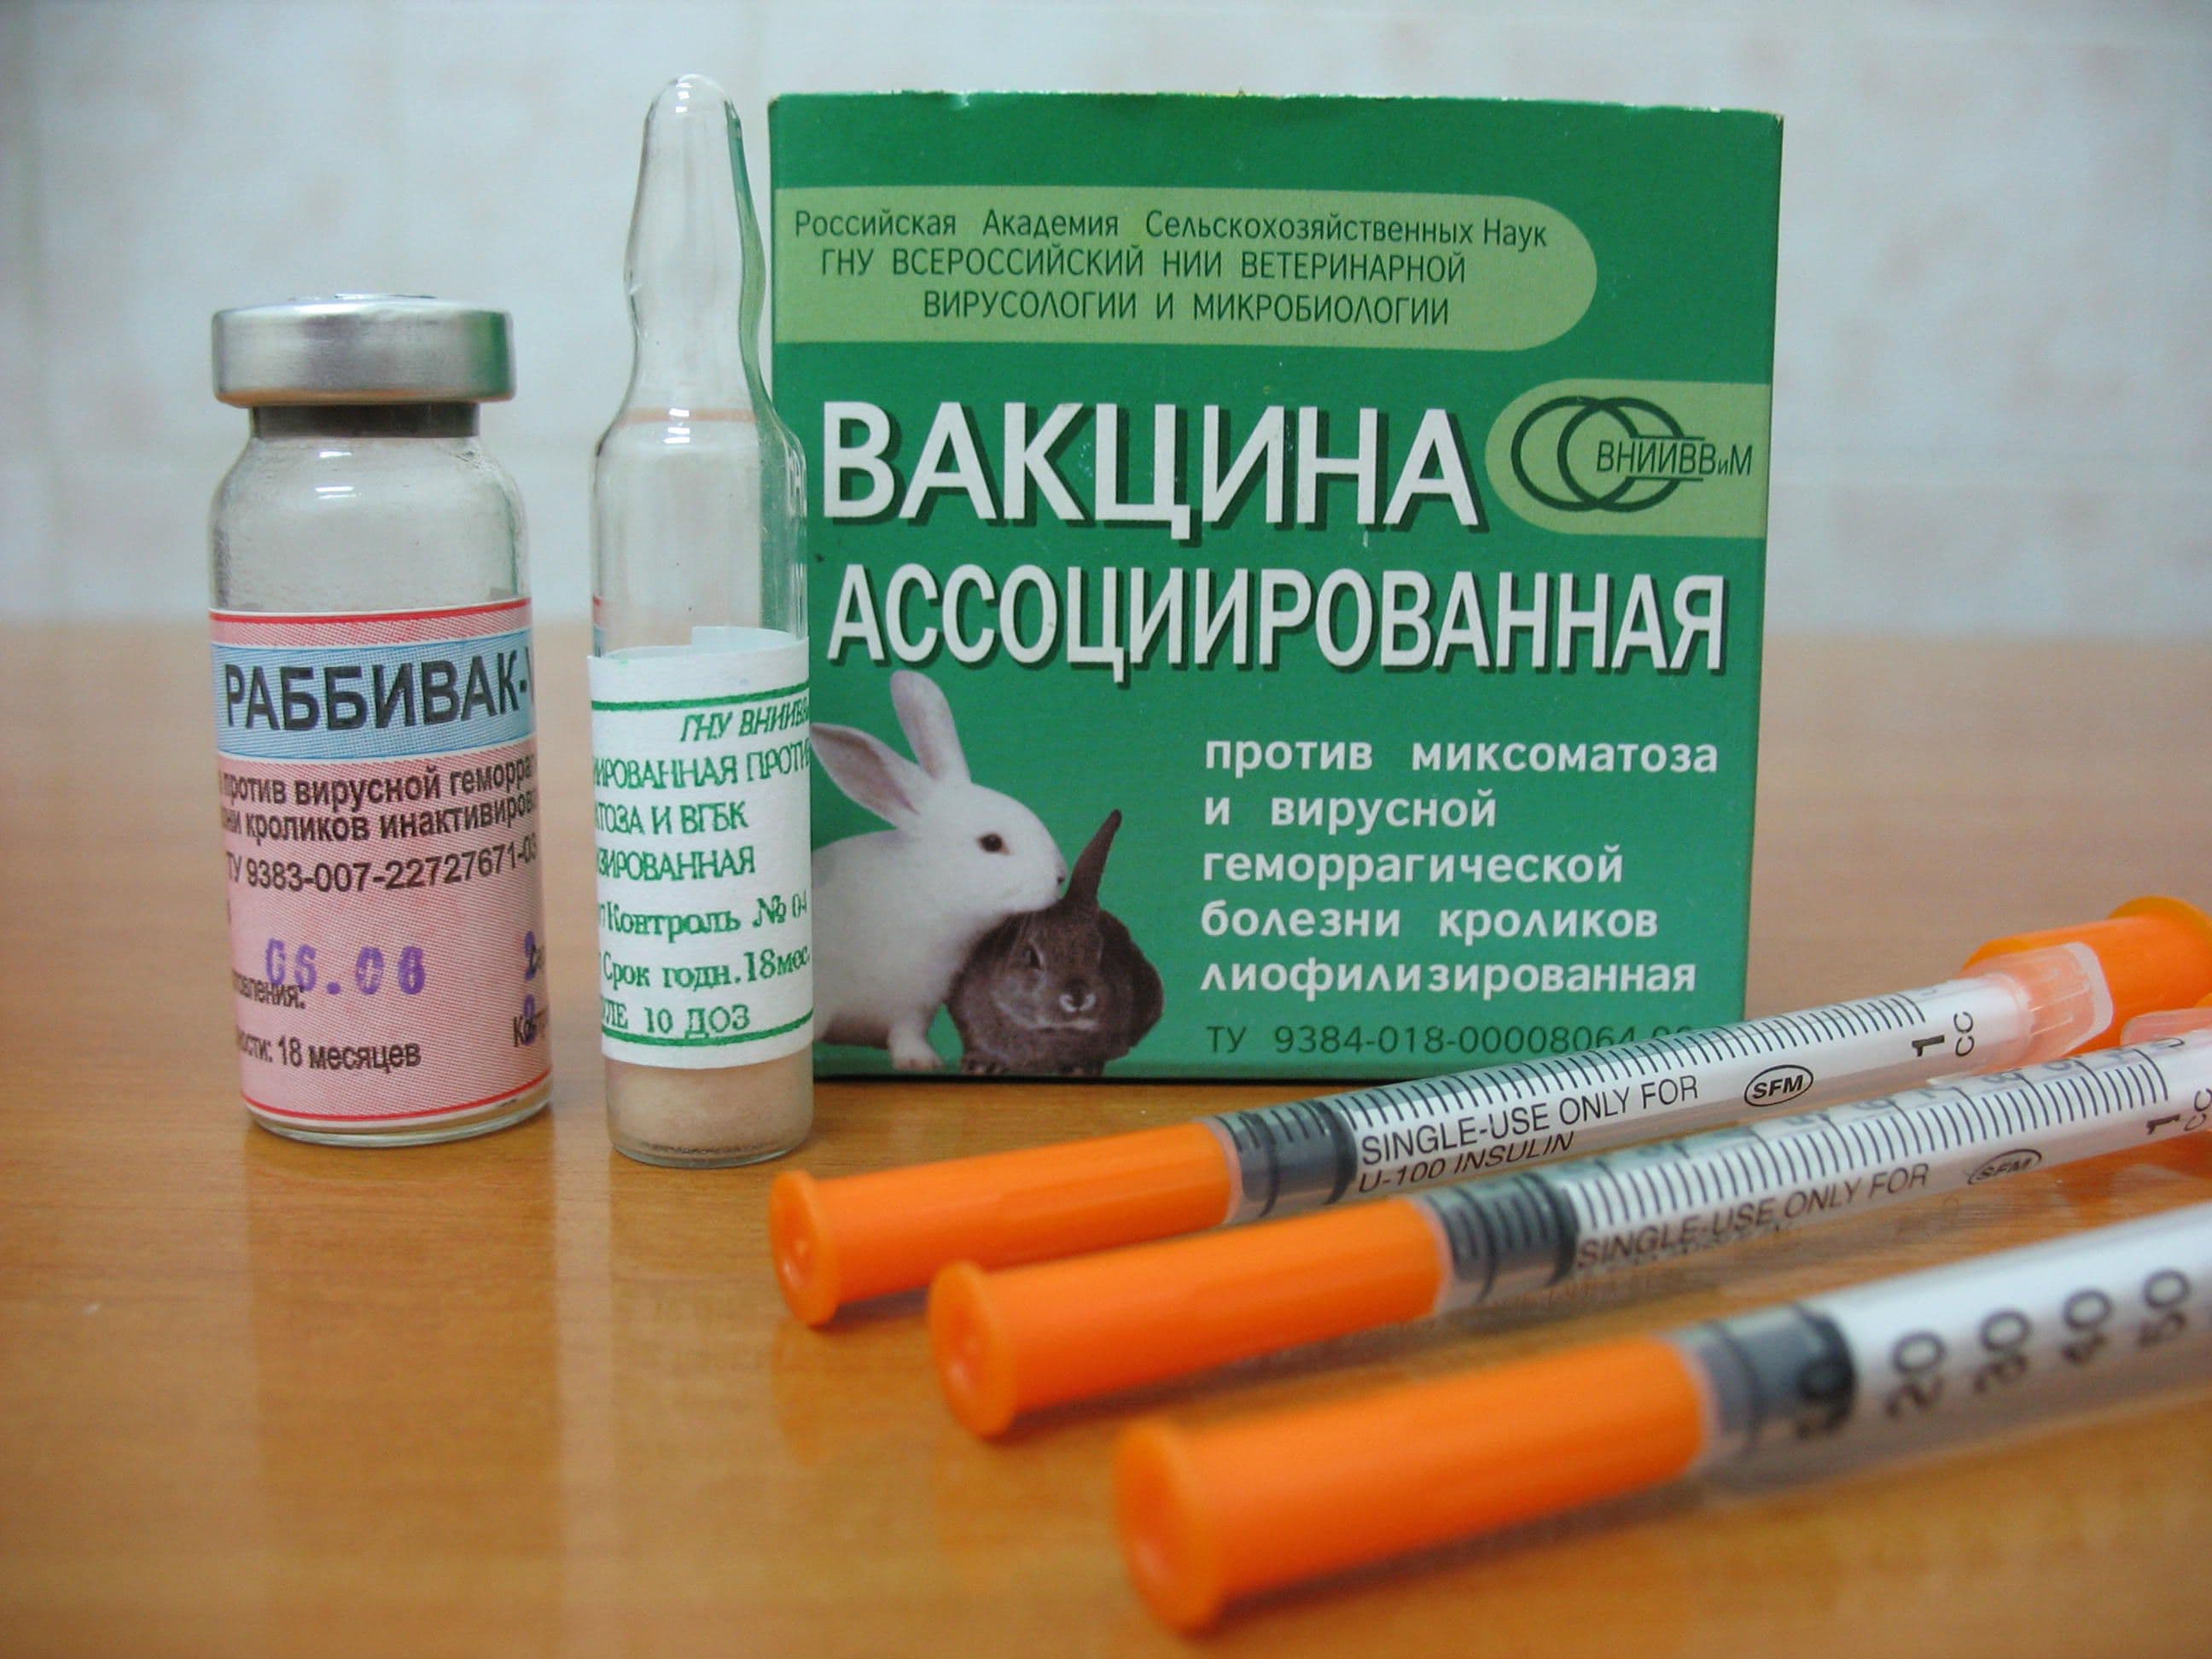 Вакцина от миксоматоза и вгбк. ВГБК вакцина для кроликов. Вакцина ВГБК+миксоматоз ассоциированная сухая. Вакцина против миксоматоза кроликов сухая. Миксоматоз кроликов вакцинация.